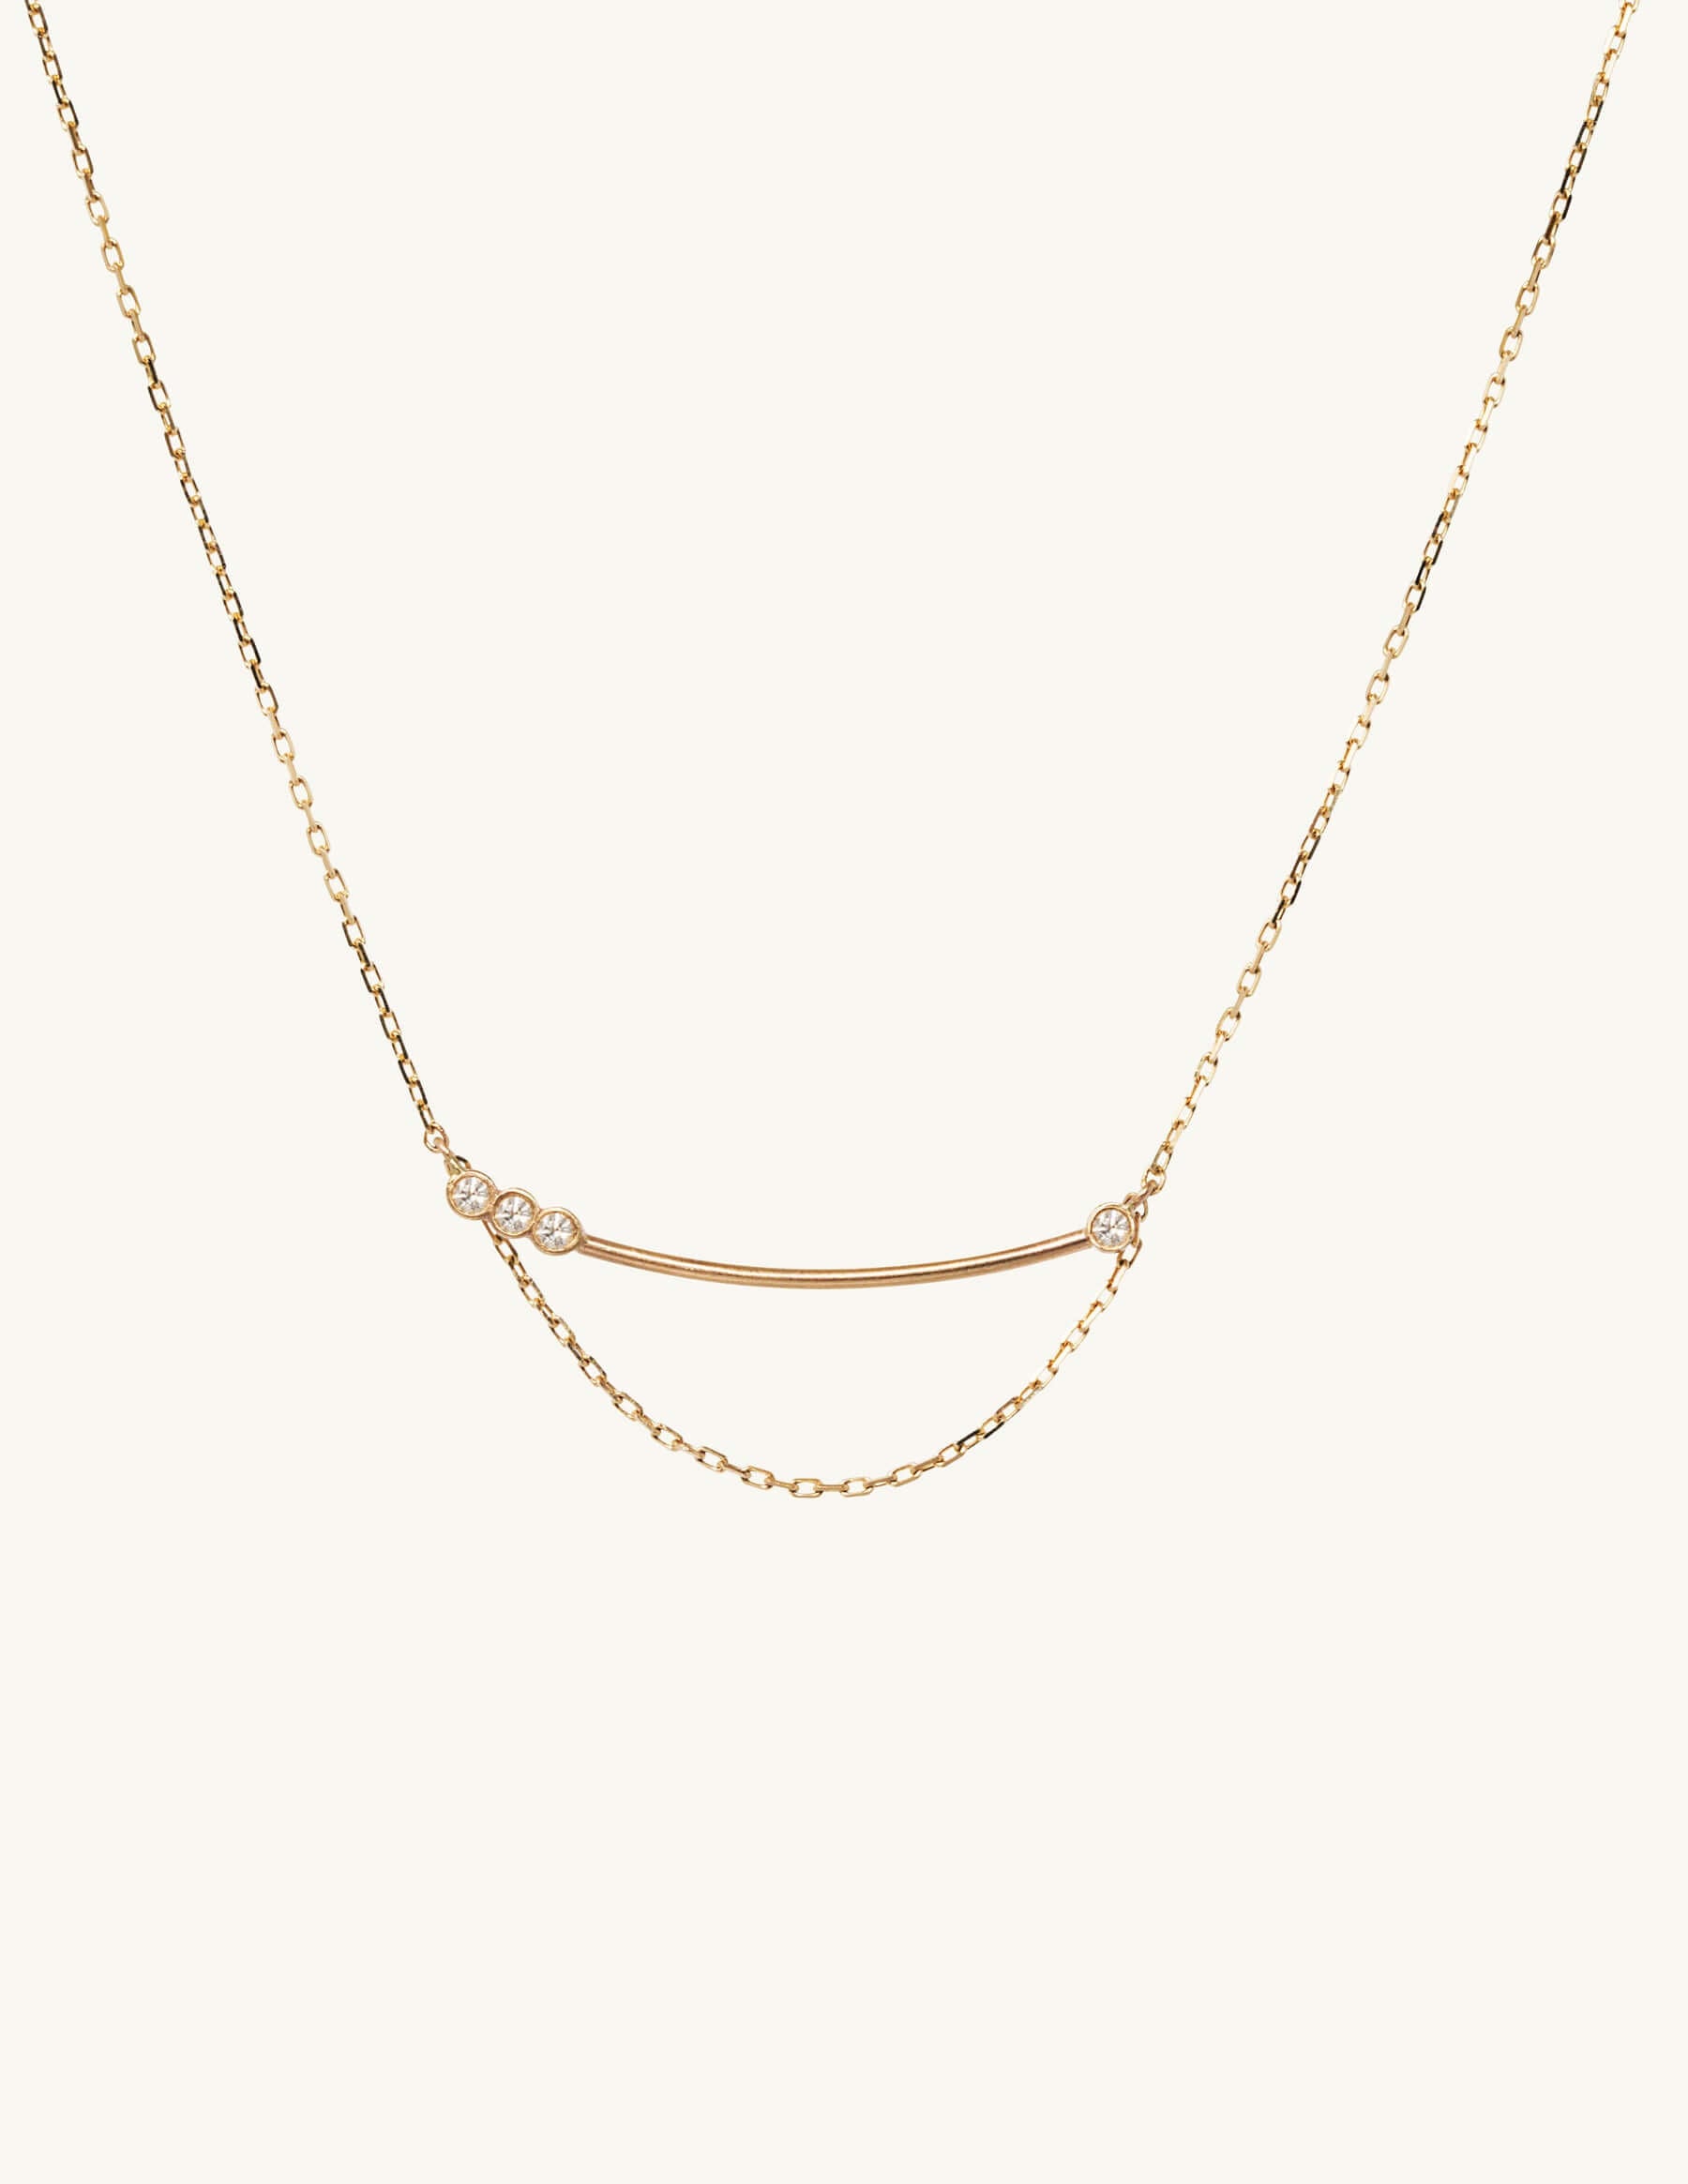 Sophie Ratner Asymmetrical Diamond Bar Necklace